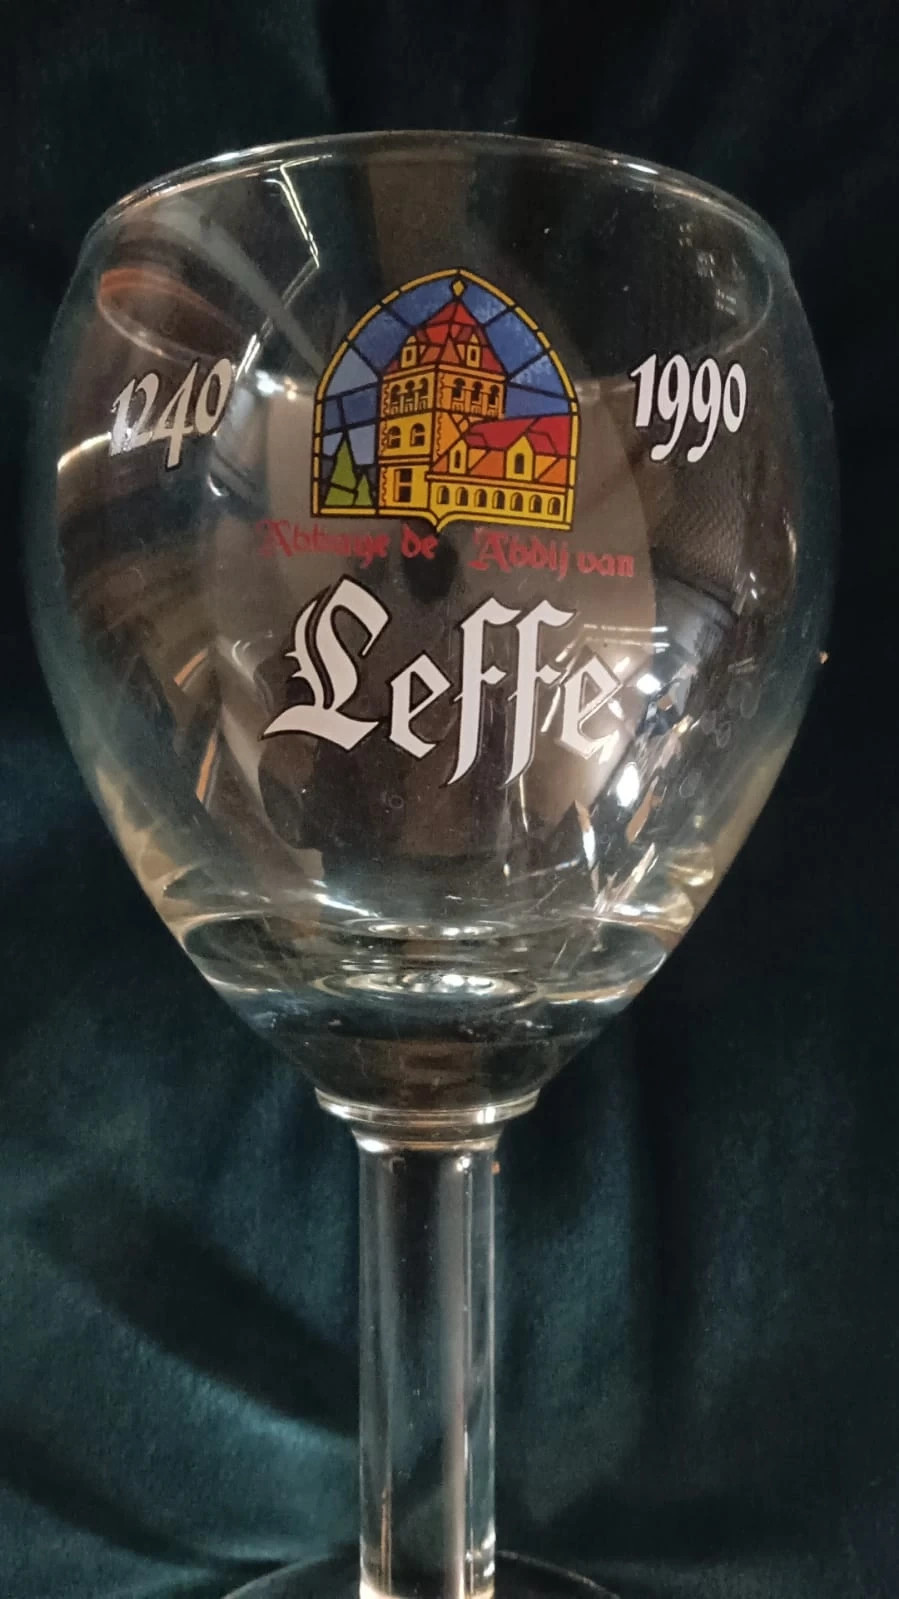 verre anniversaire 1990 Leffe collection